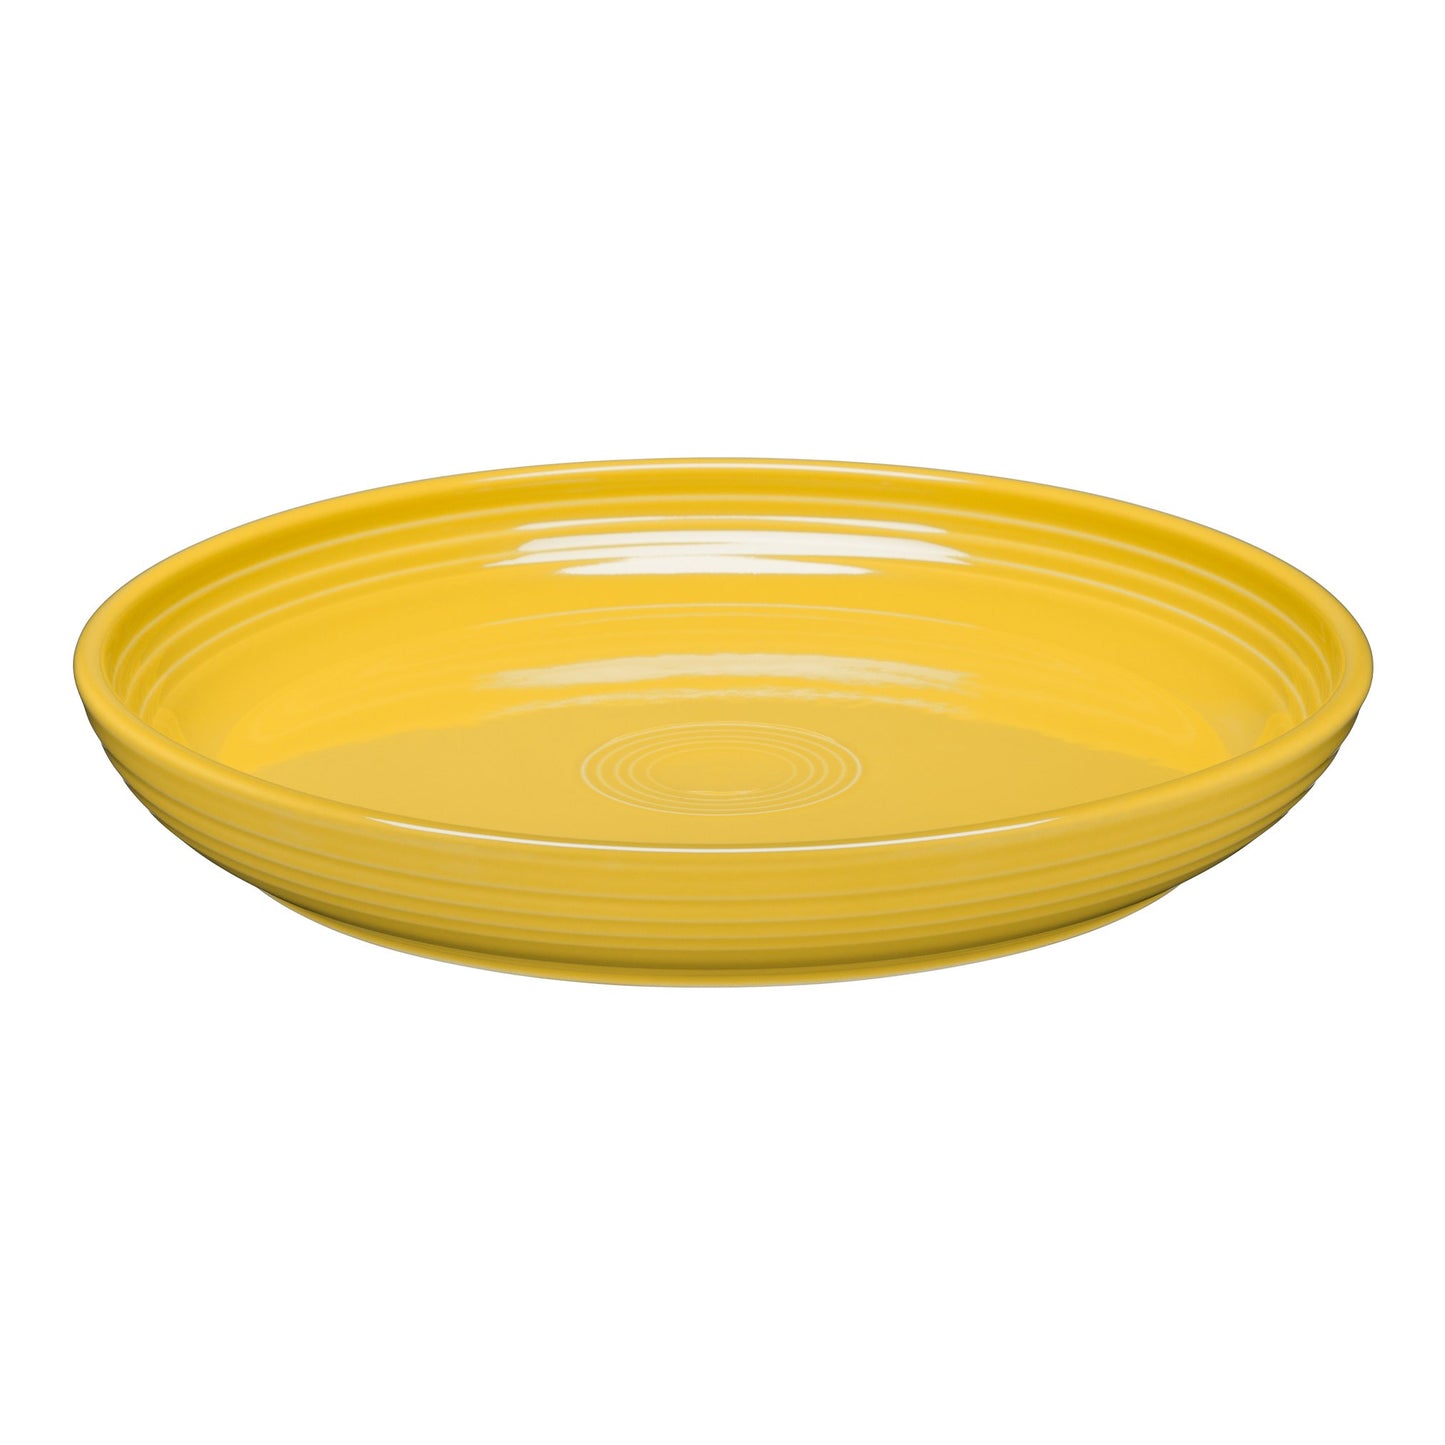 Fiesta® Bowl Plate